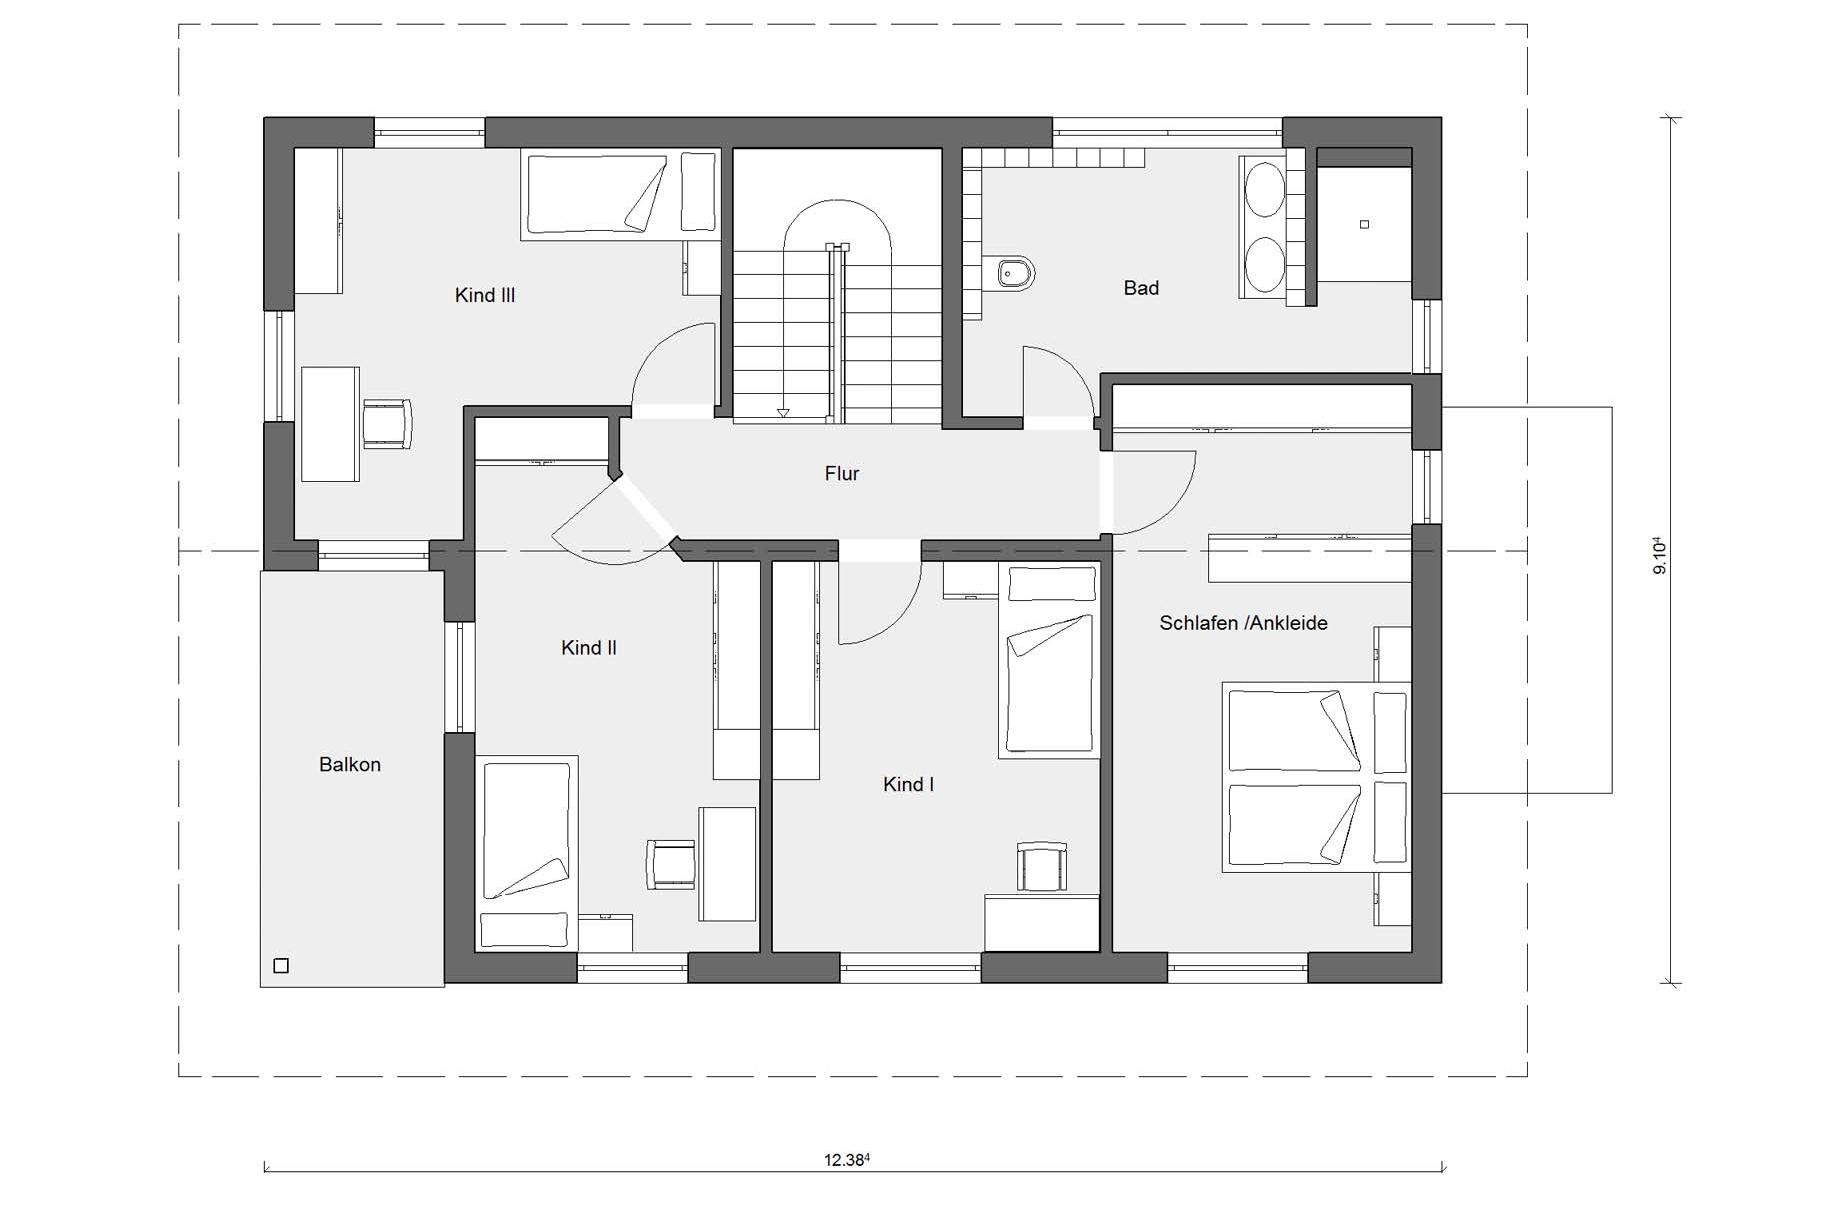 Attic floor plan E 20-172.2 Energyplus prefabricated house